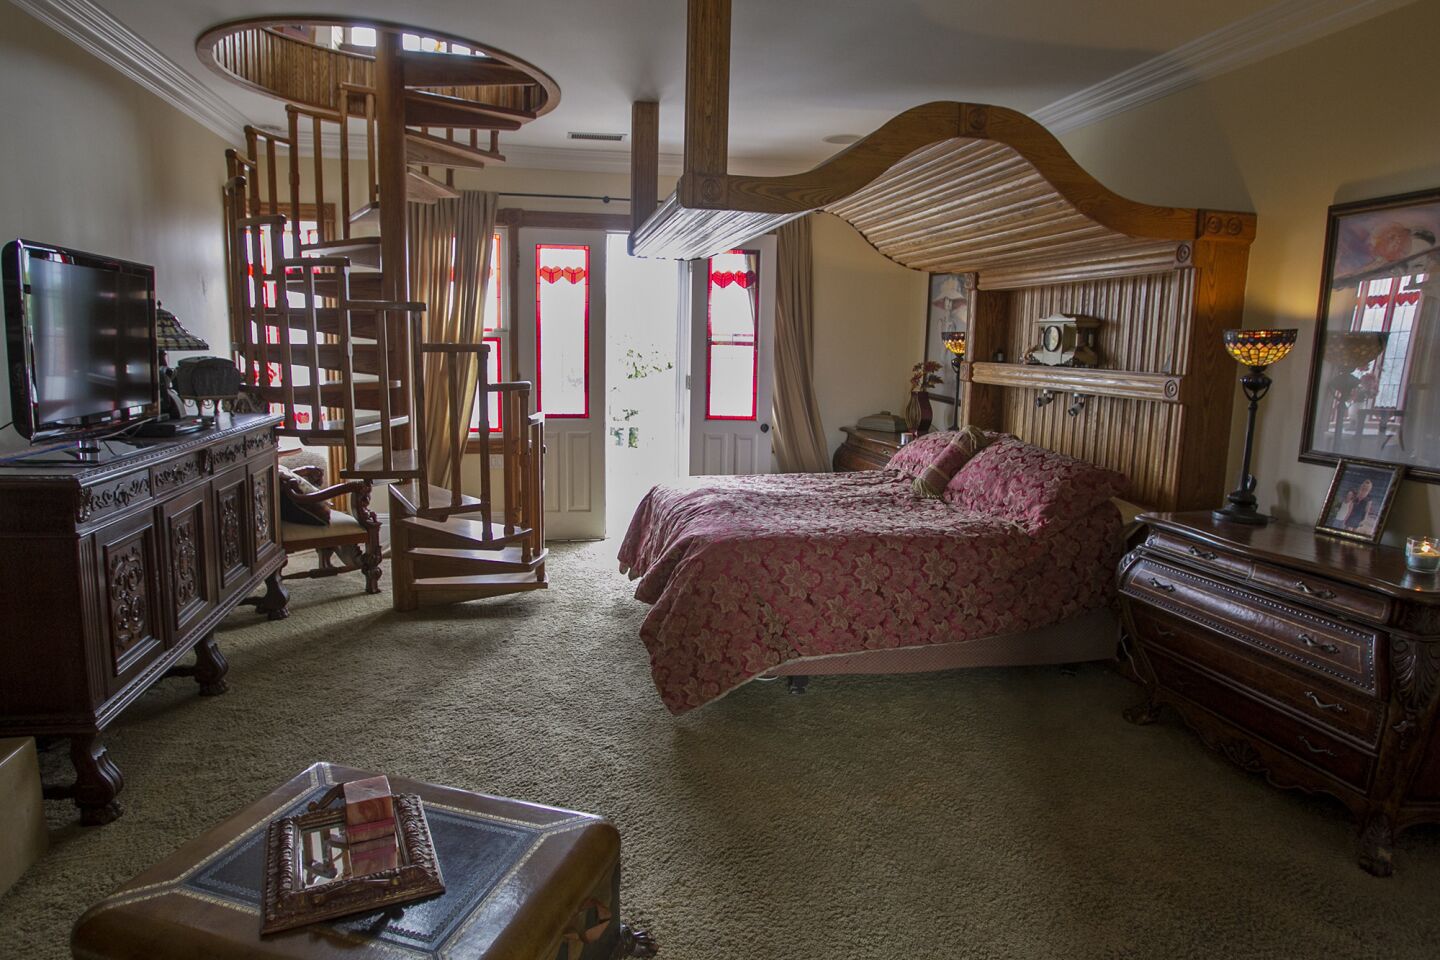 victorian master bedroom